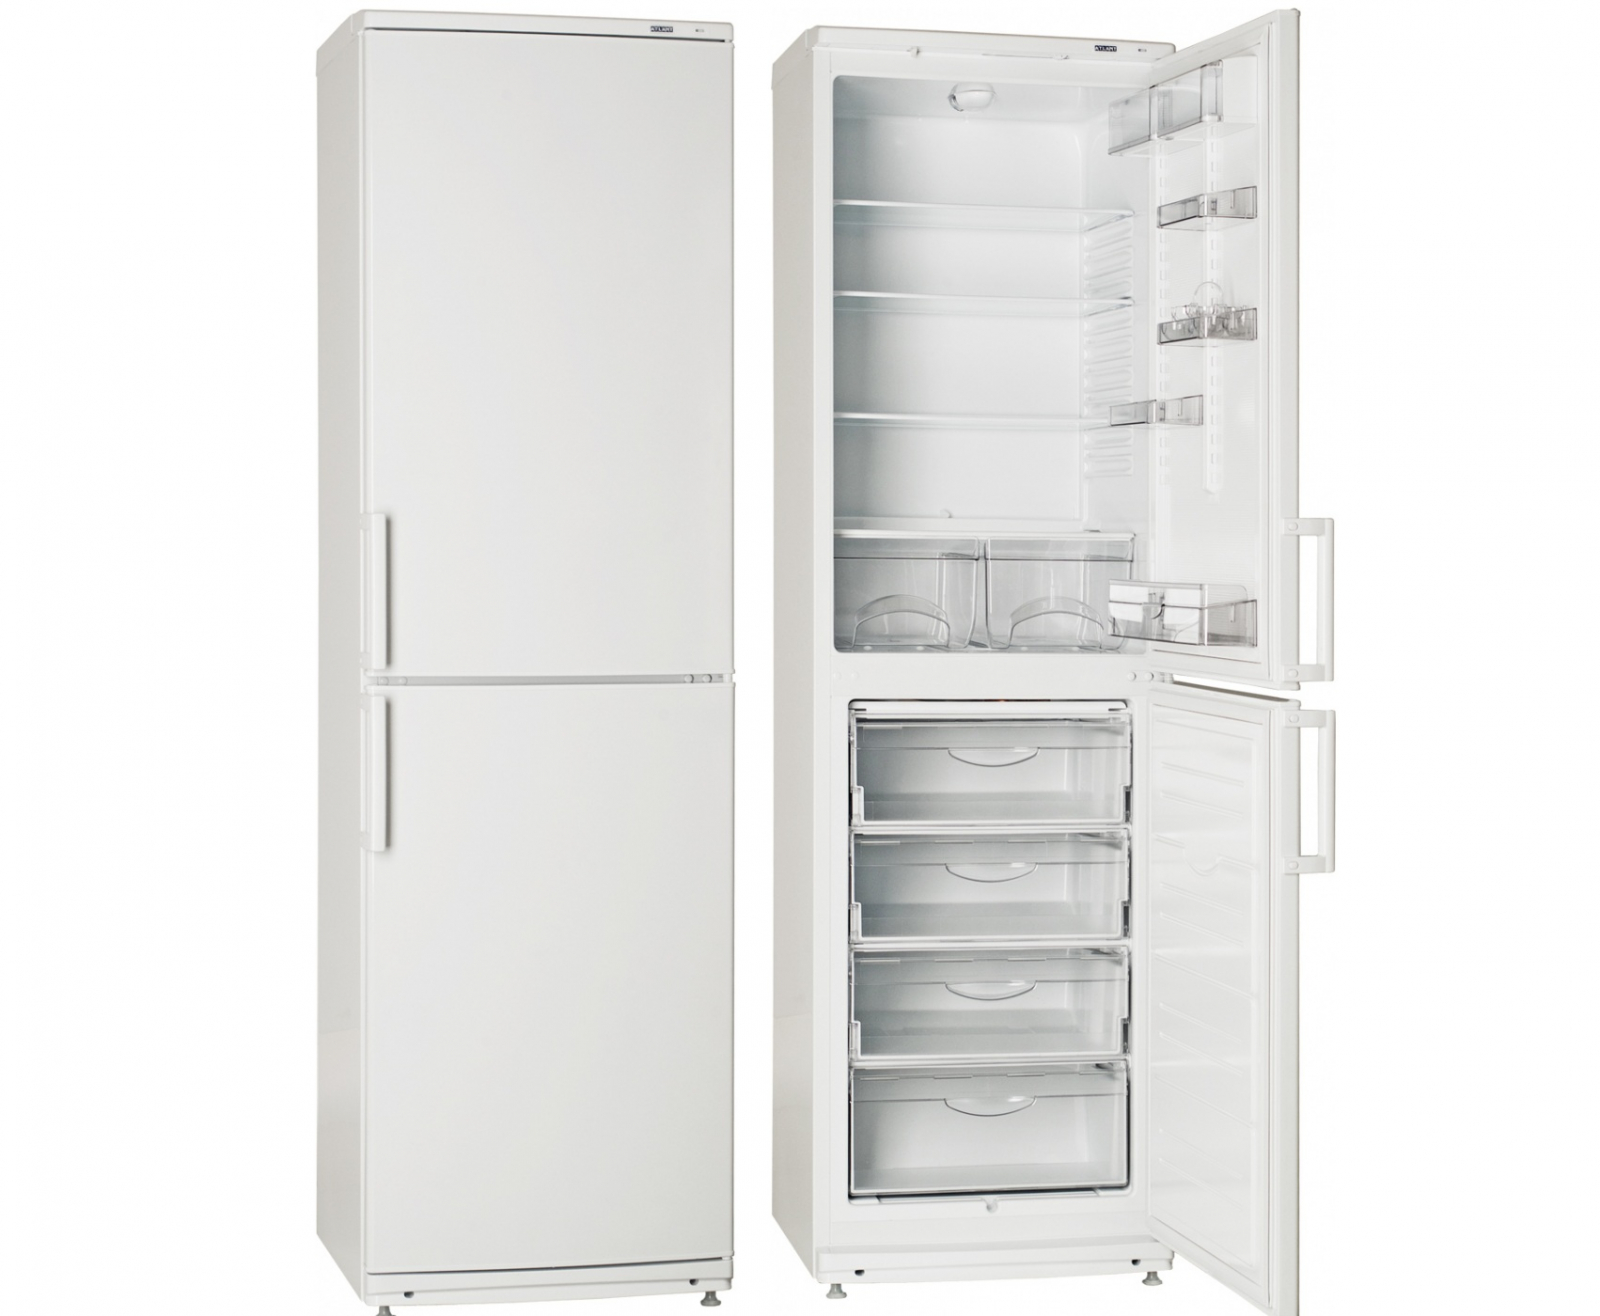 холодильник atlant xm 4025-000, купить в Красноярске холодильник atlant xm 4025-000,  купить в Красноярске дешево холодильник atlant xm 4025-000, купить в Красноярске минимальной цене холодильник atlant xm 4025-000